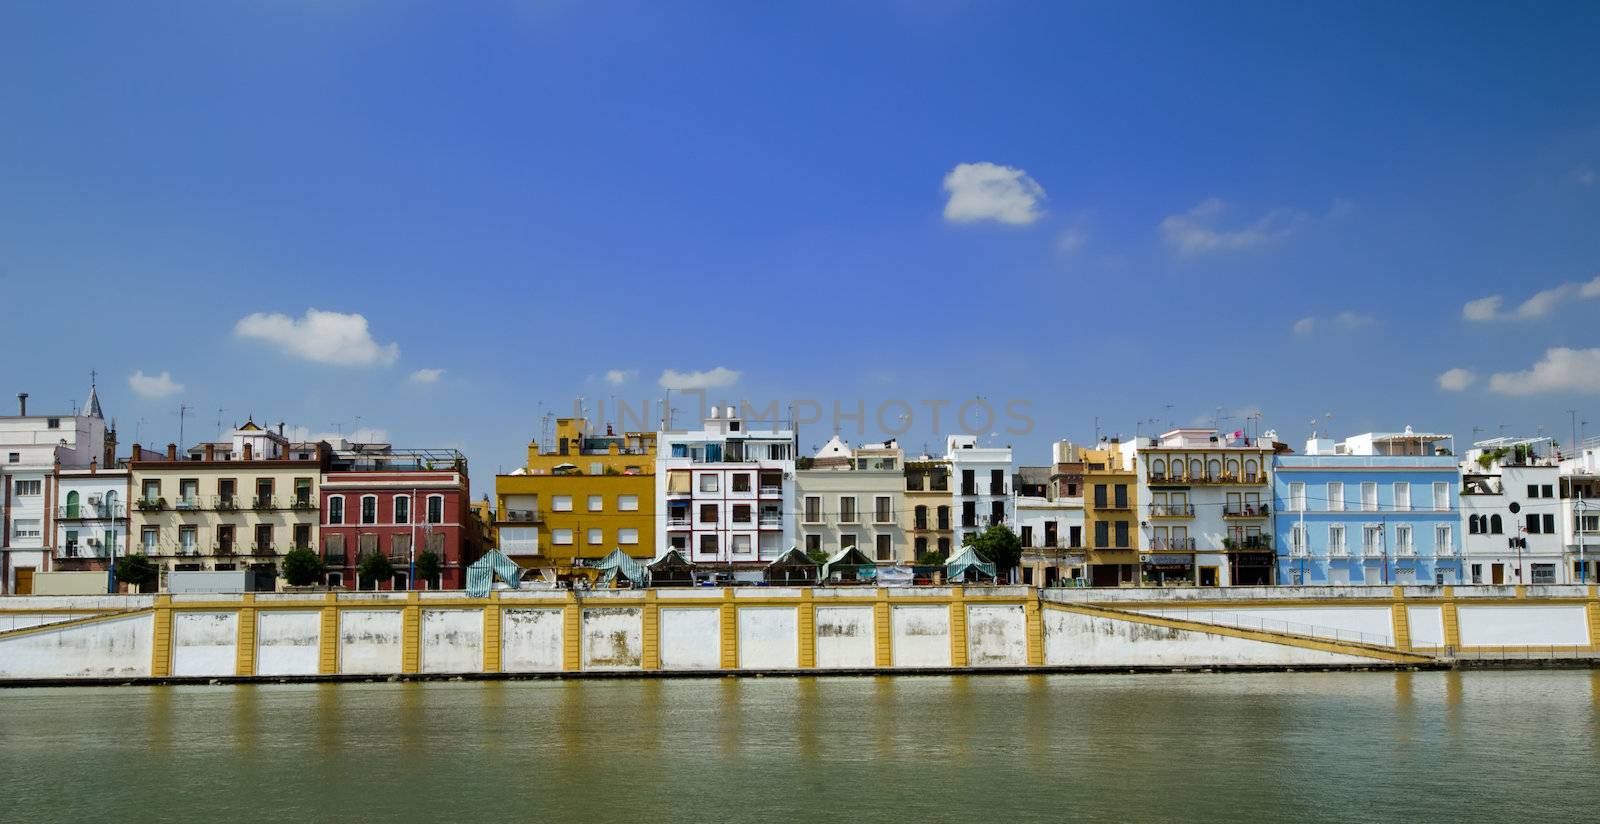 Seville and the Guadalquivir by njaj